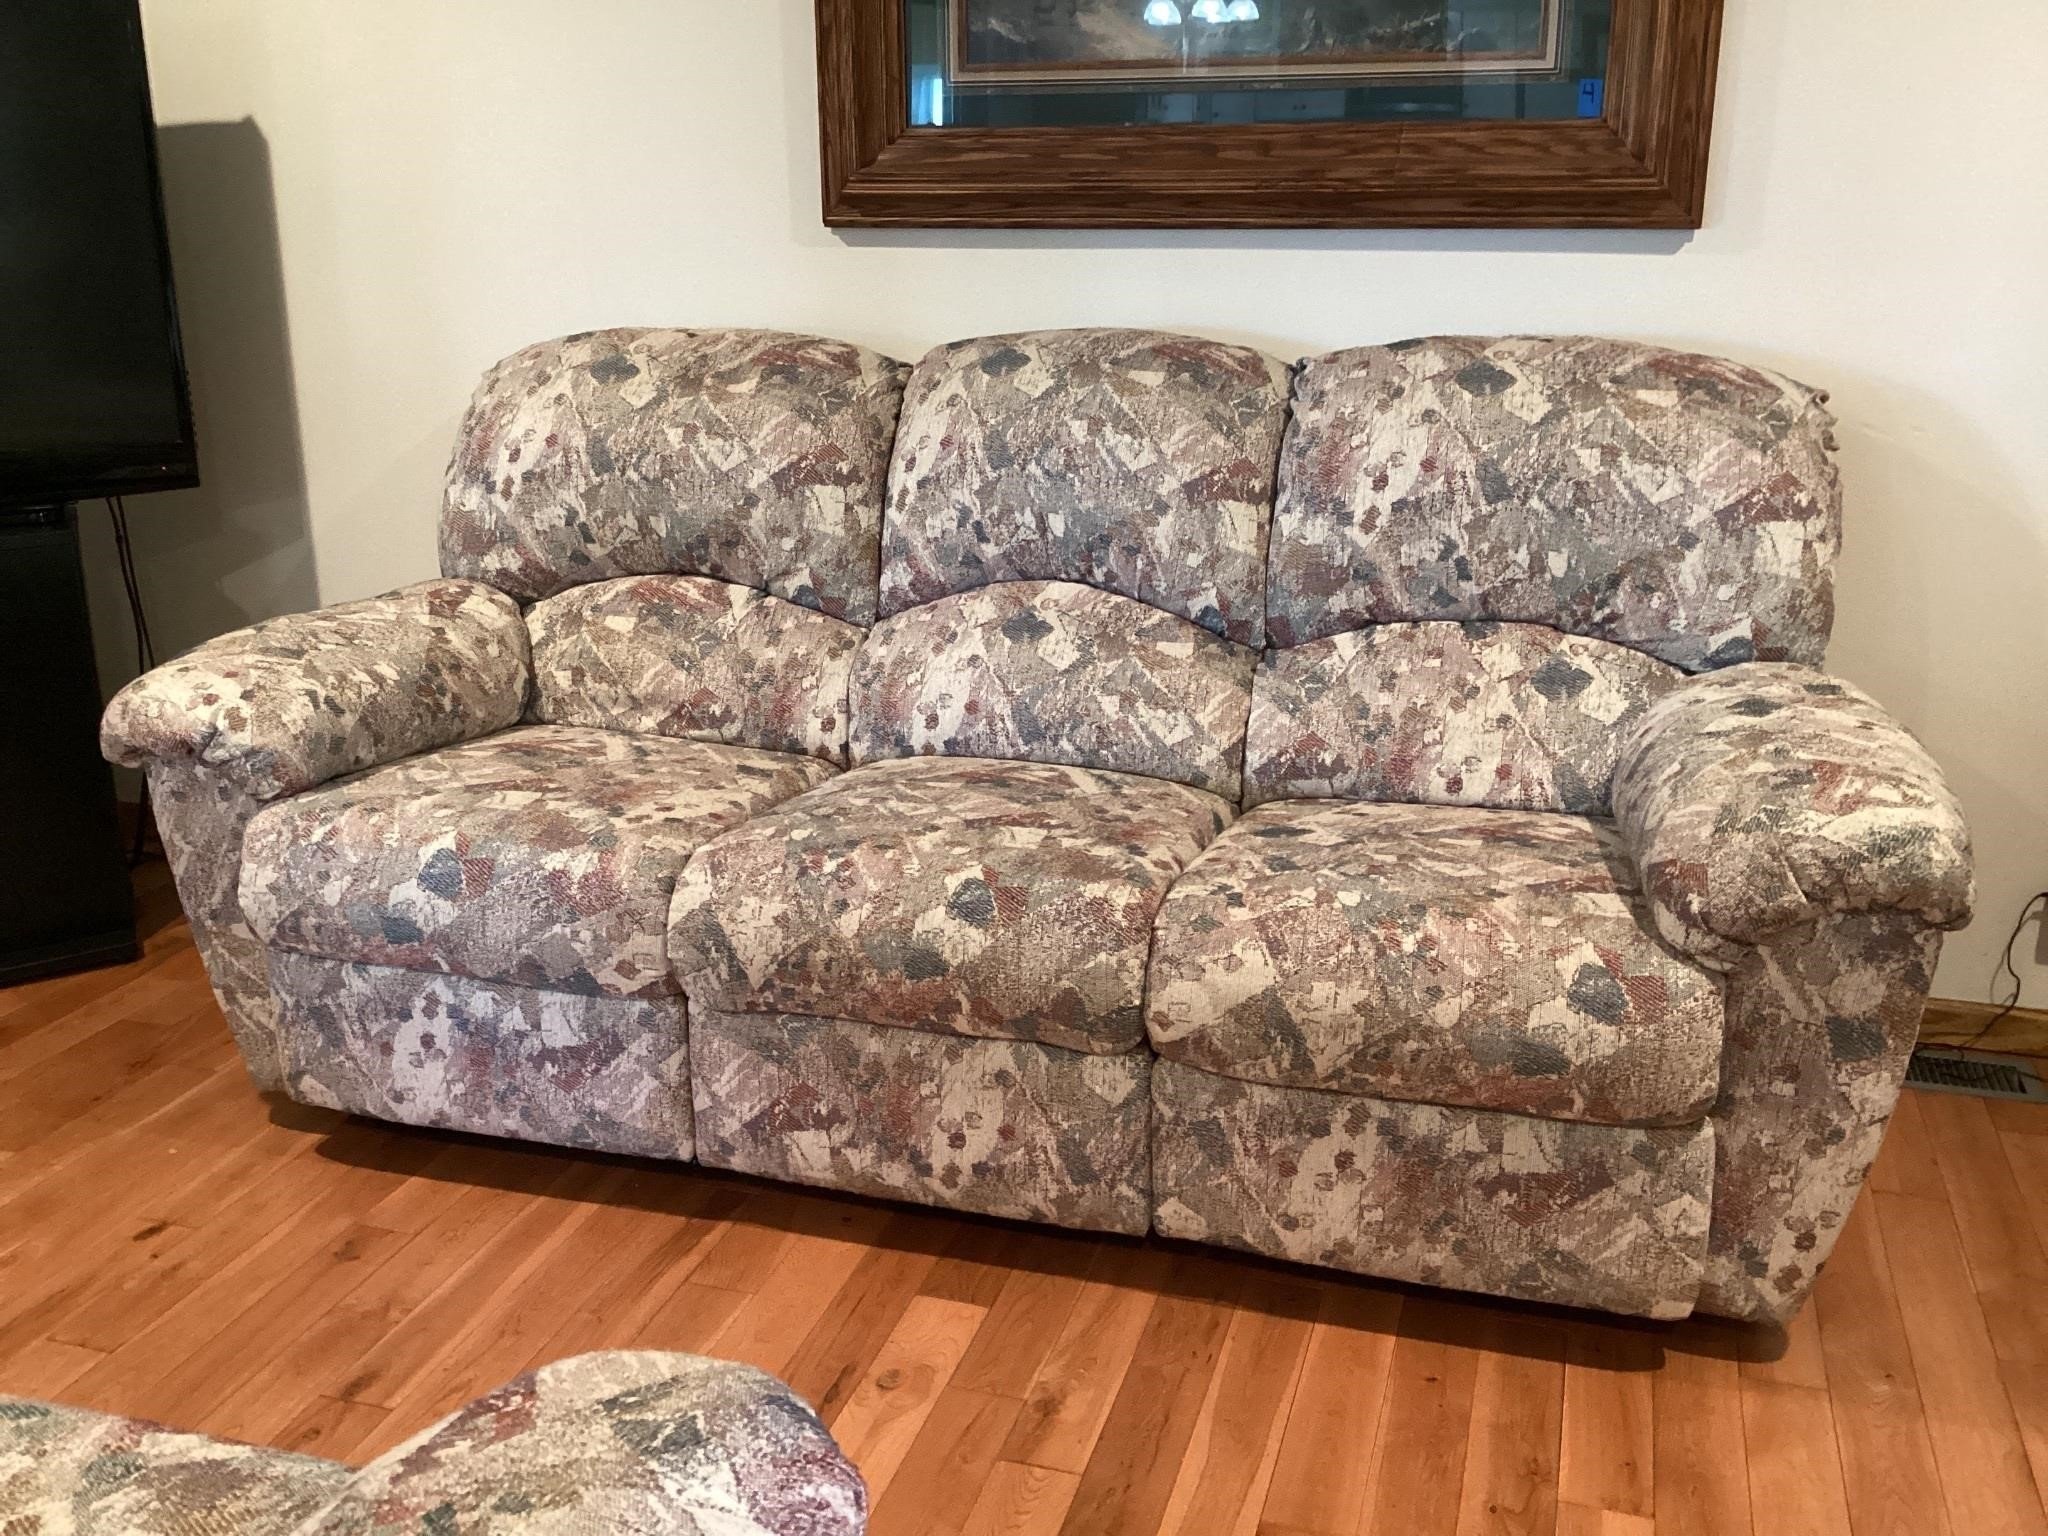 Manual recliner sofa